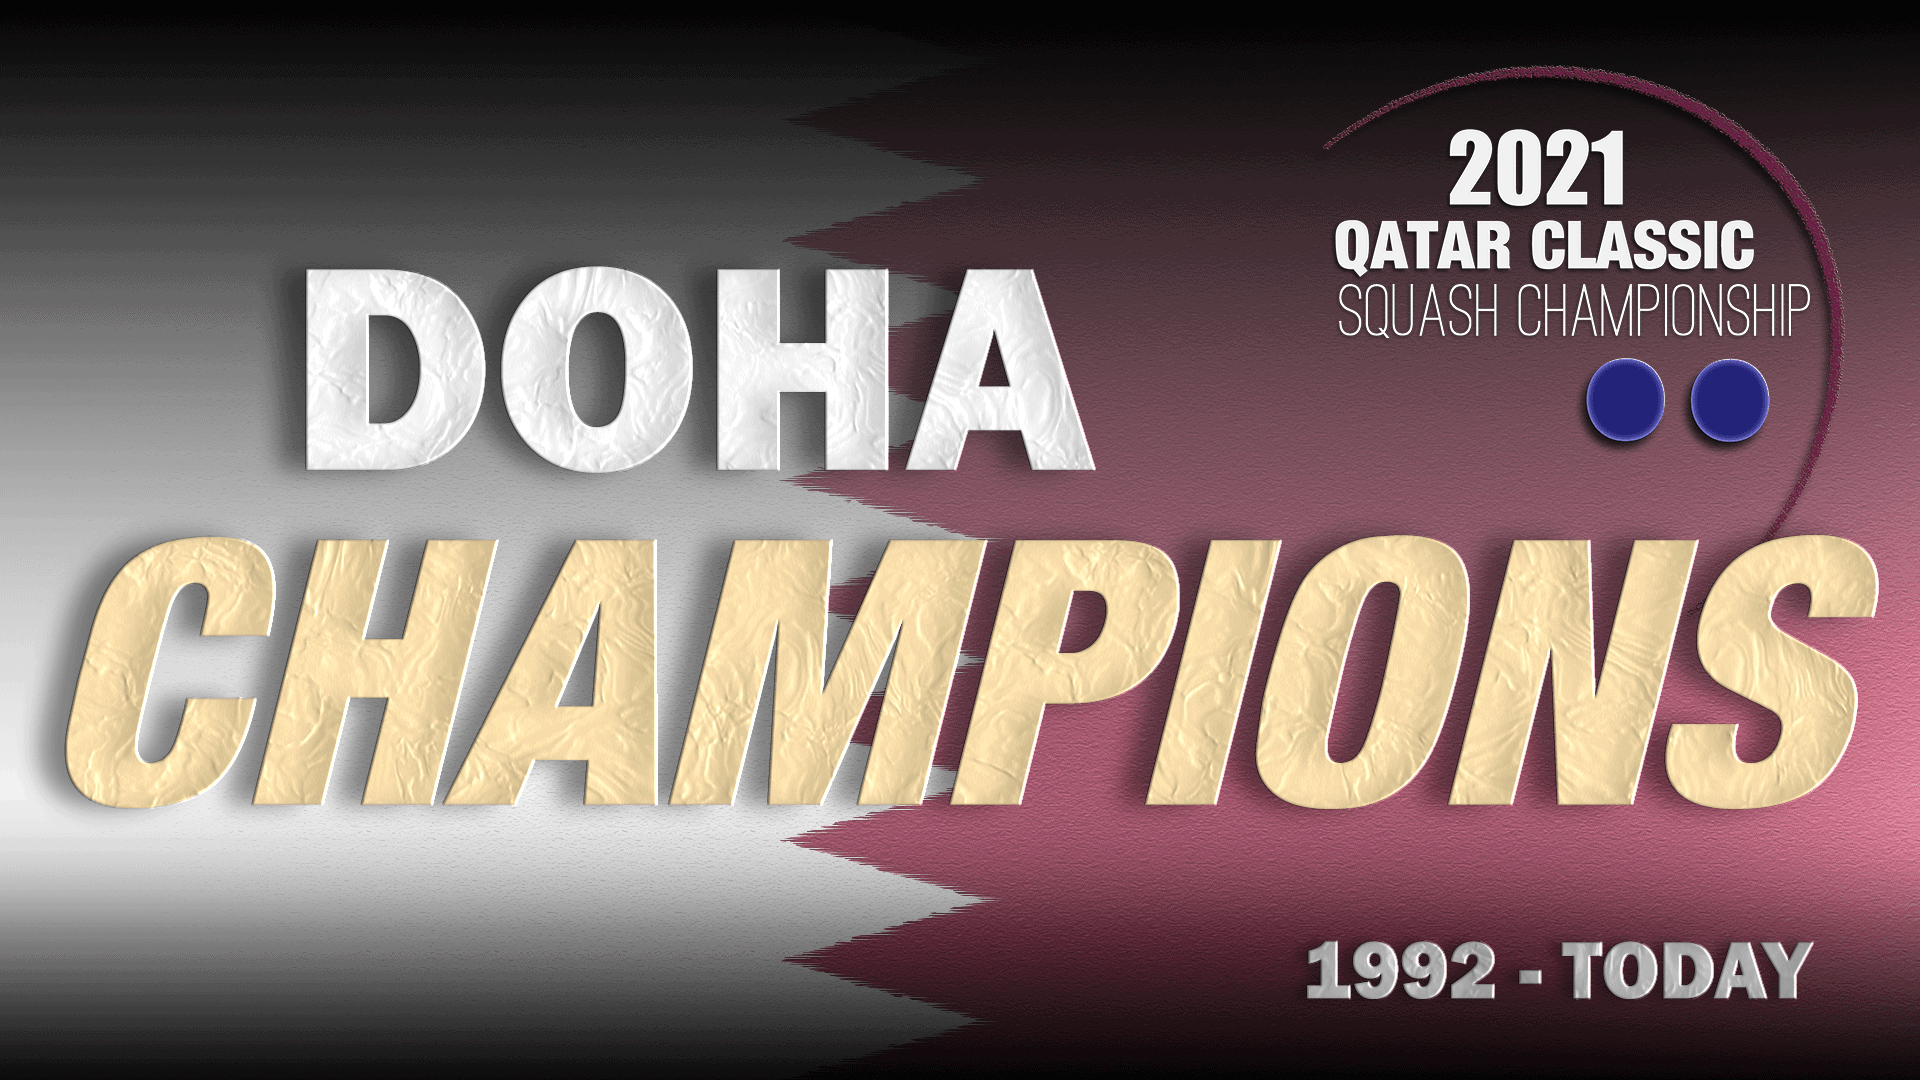 Squash Emcee Andy Taylor. 2021 Qatar Classic. Doha Champions